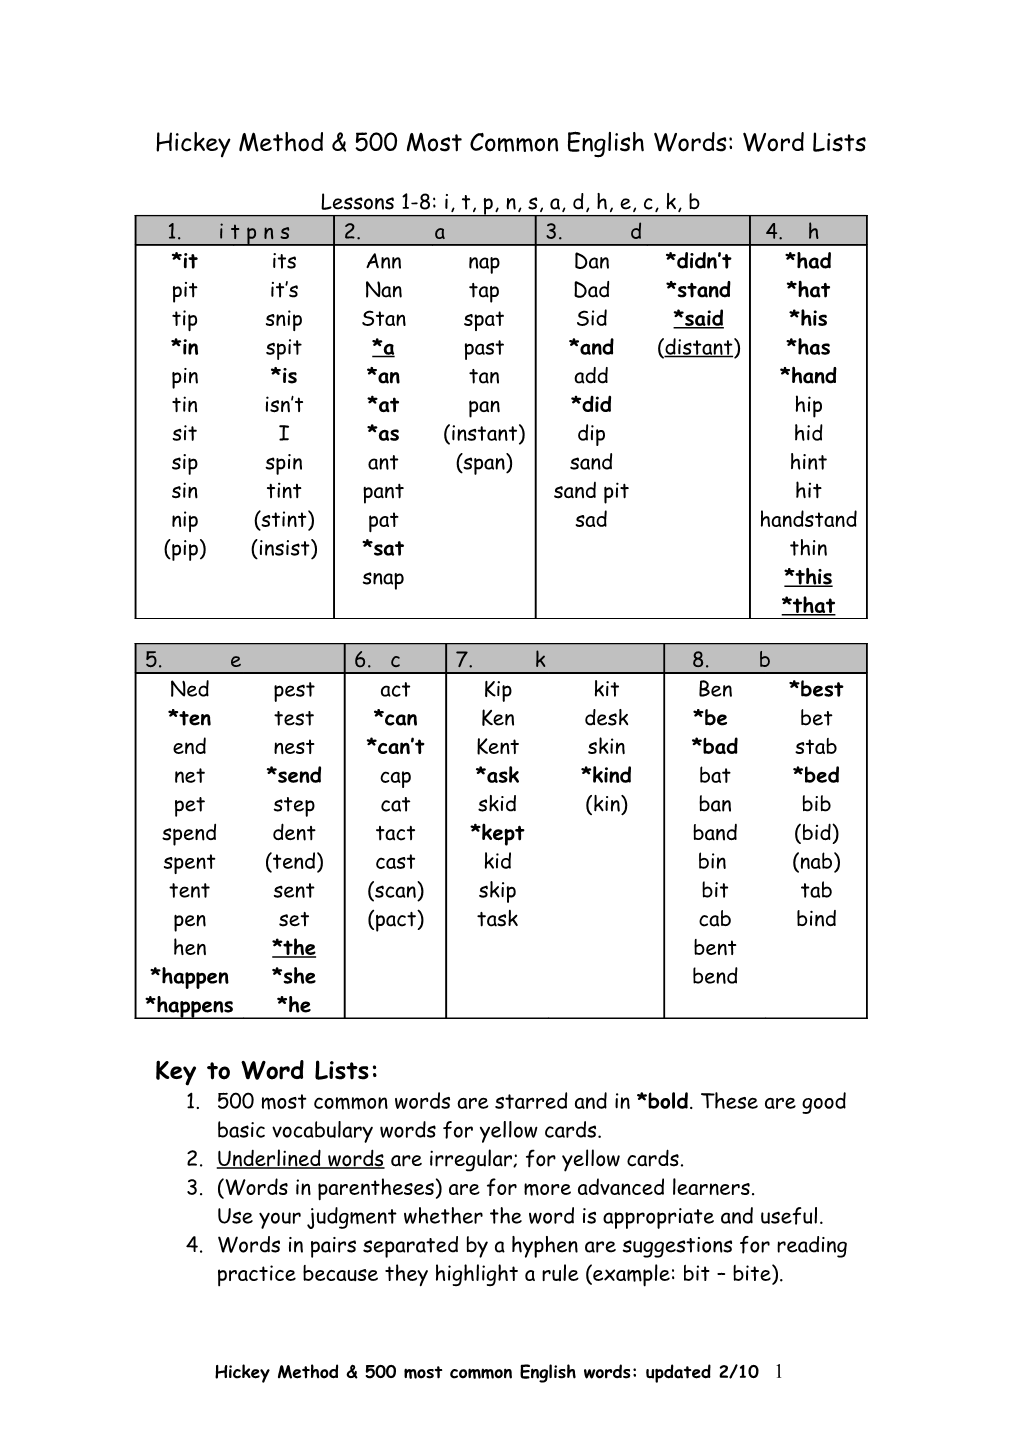 Hickey Method: Word Lists